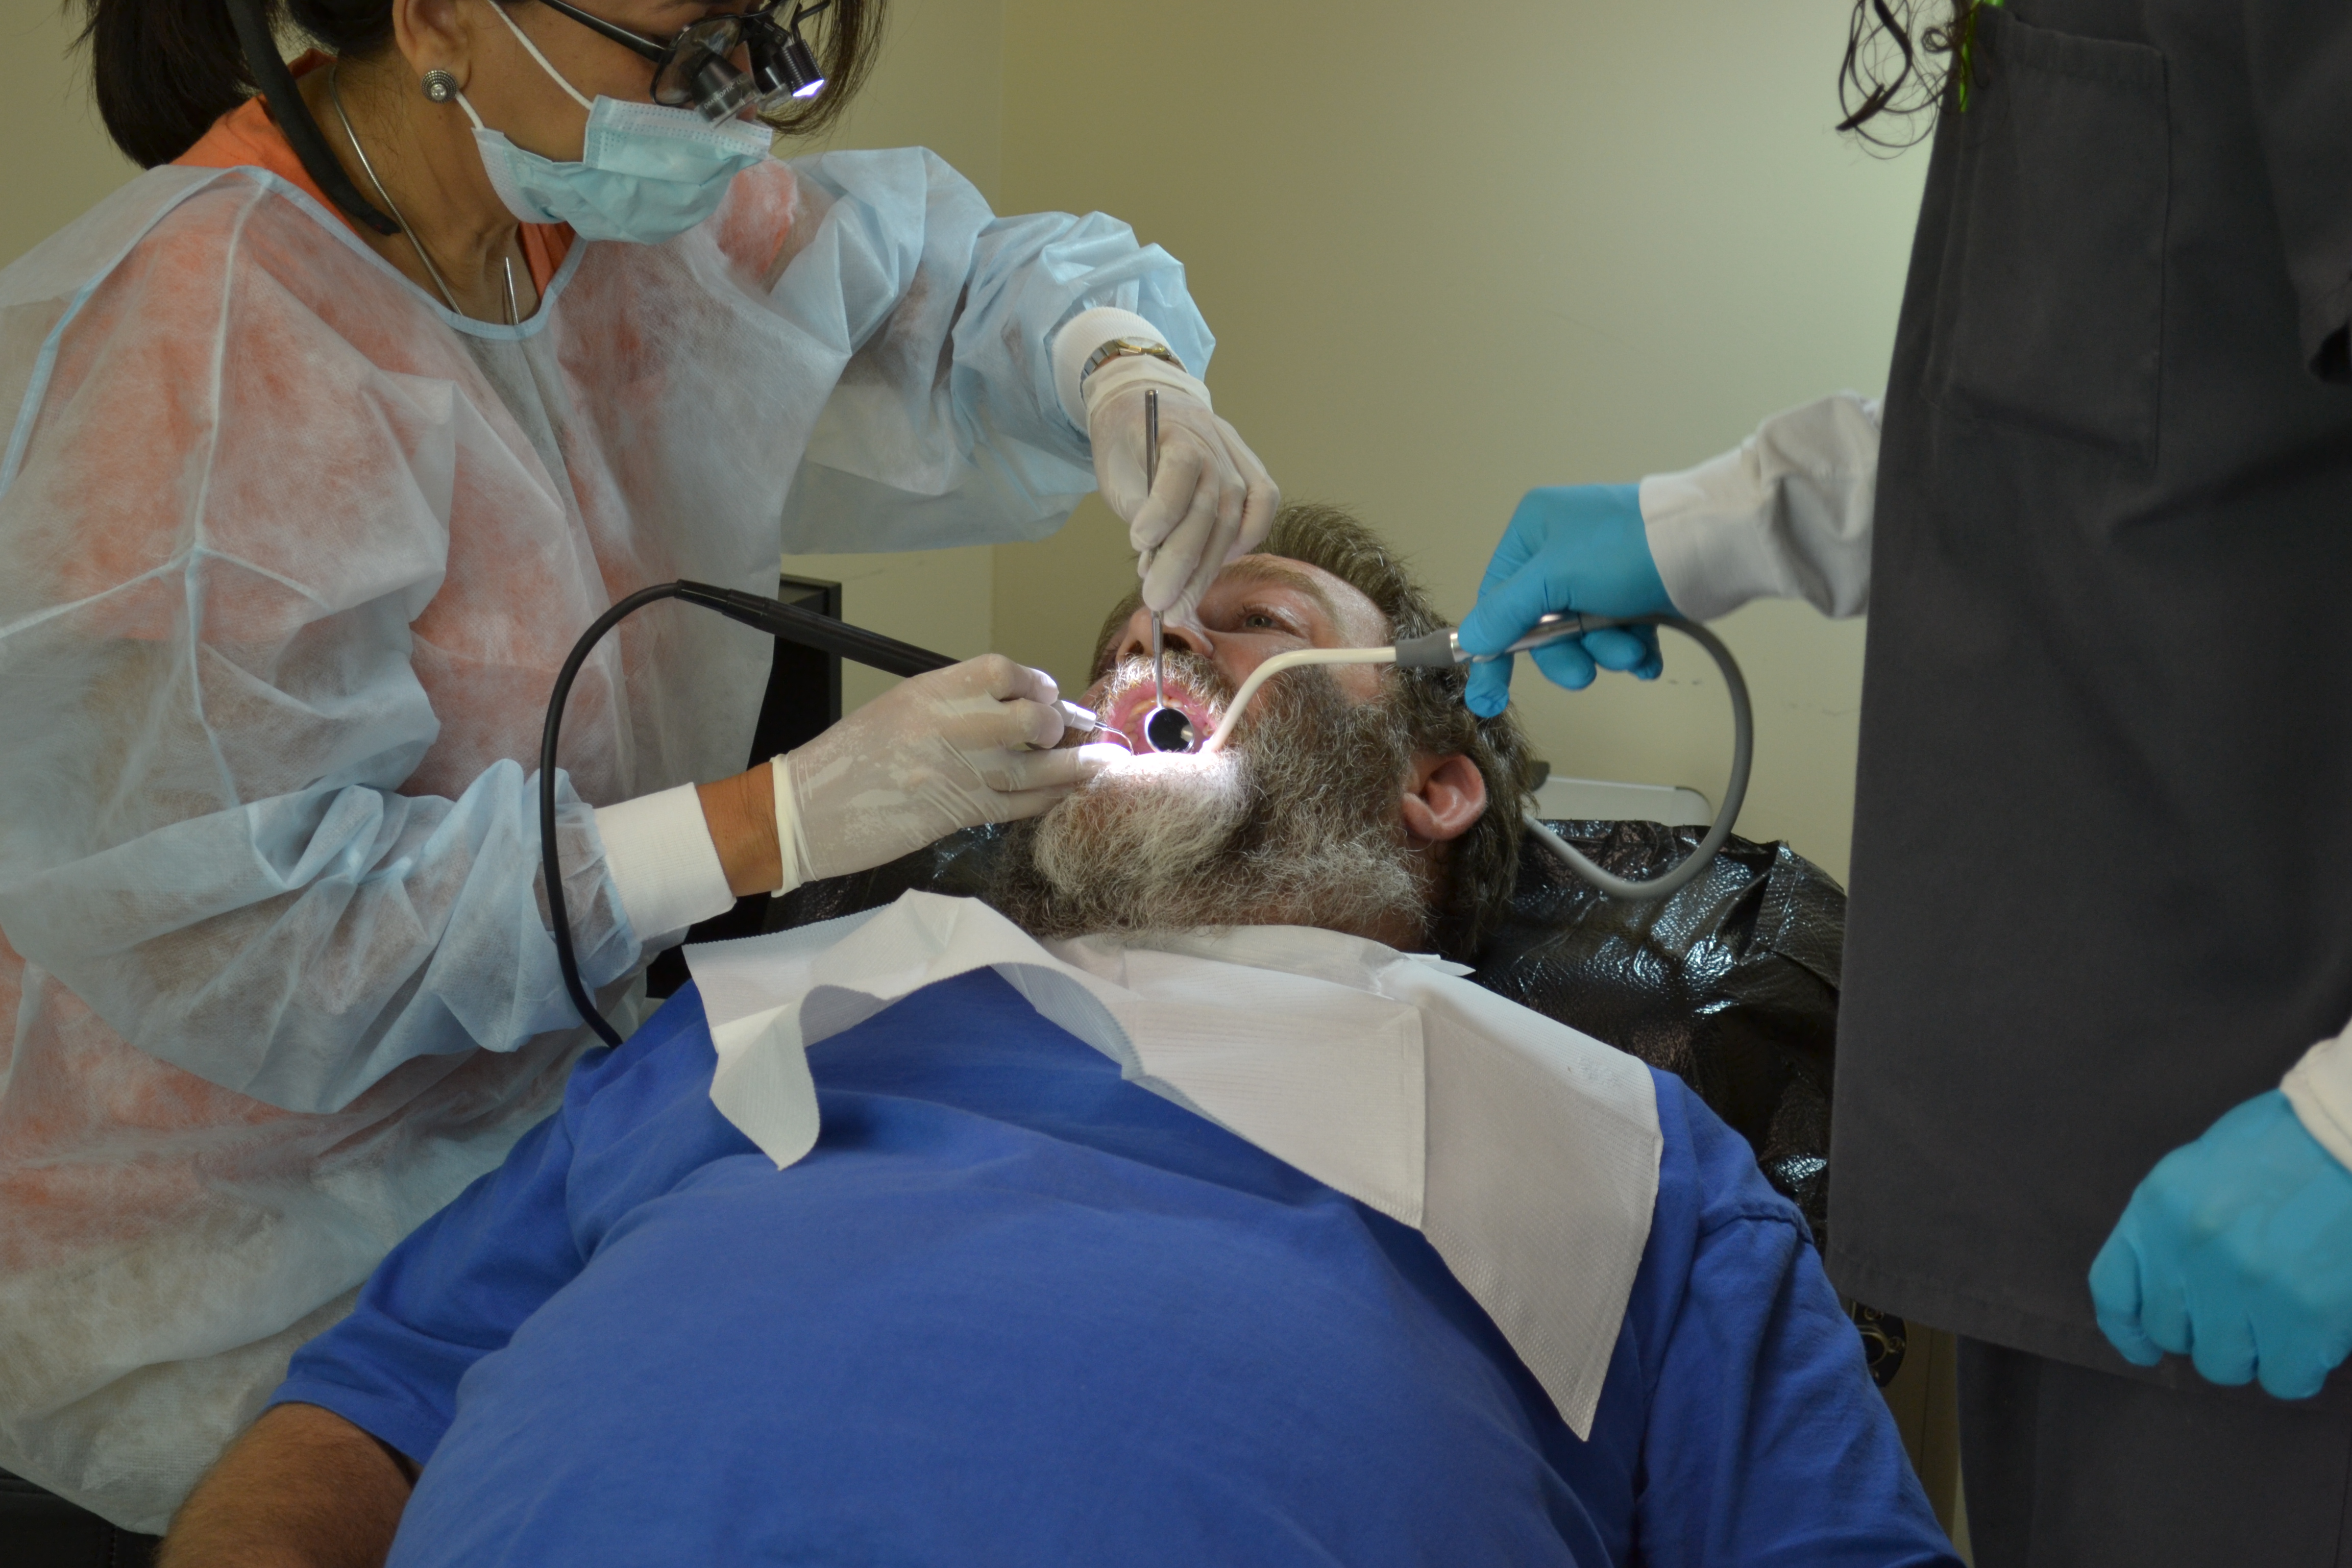 Dental procedure for community service